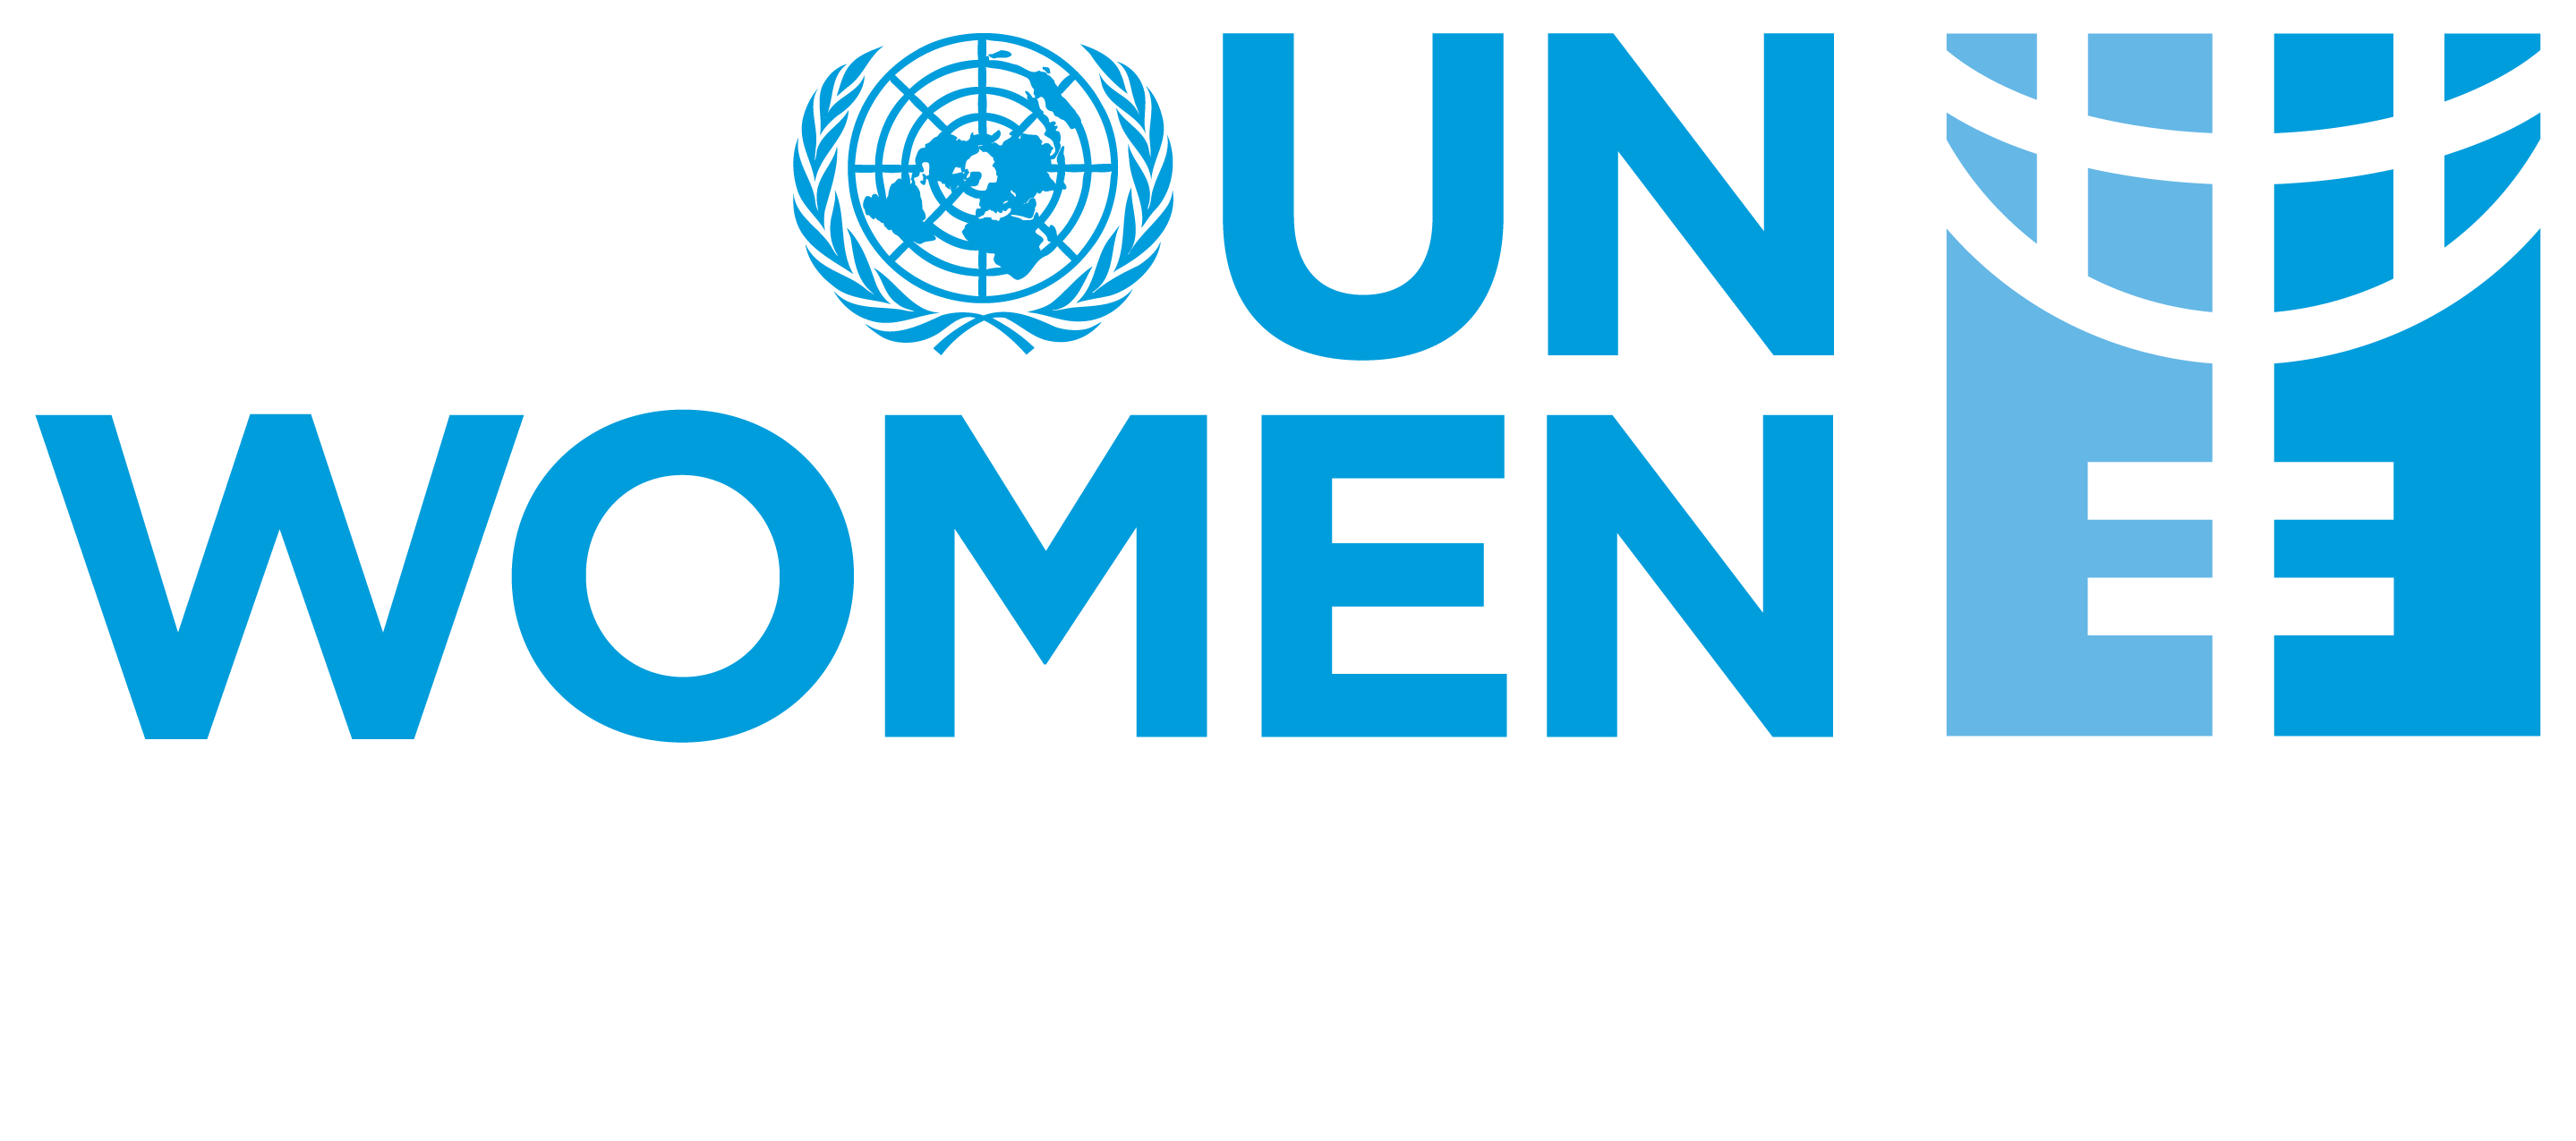 UN Women logo in blue colour